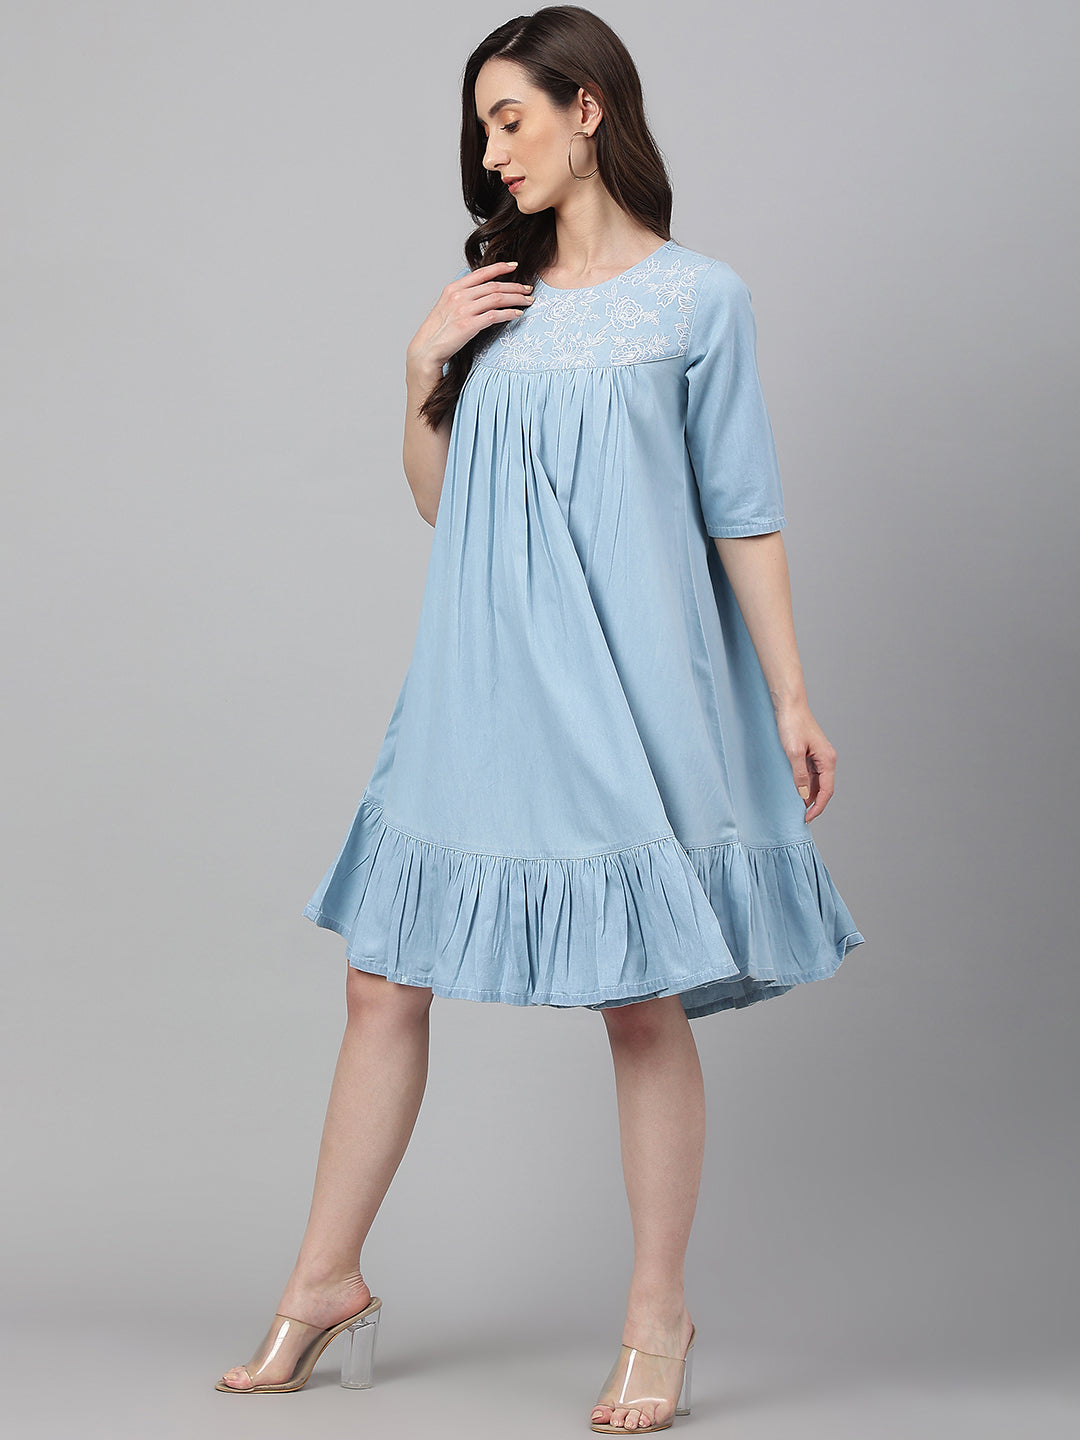 Women's Solid Light Blue Denim Dress - Janasya